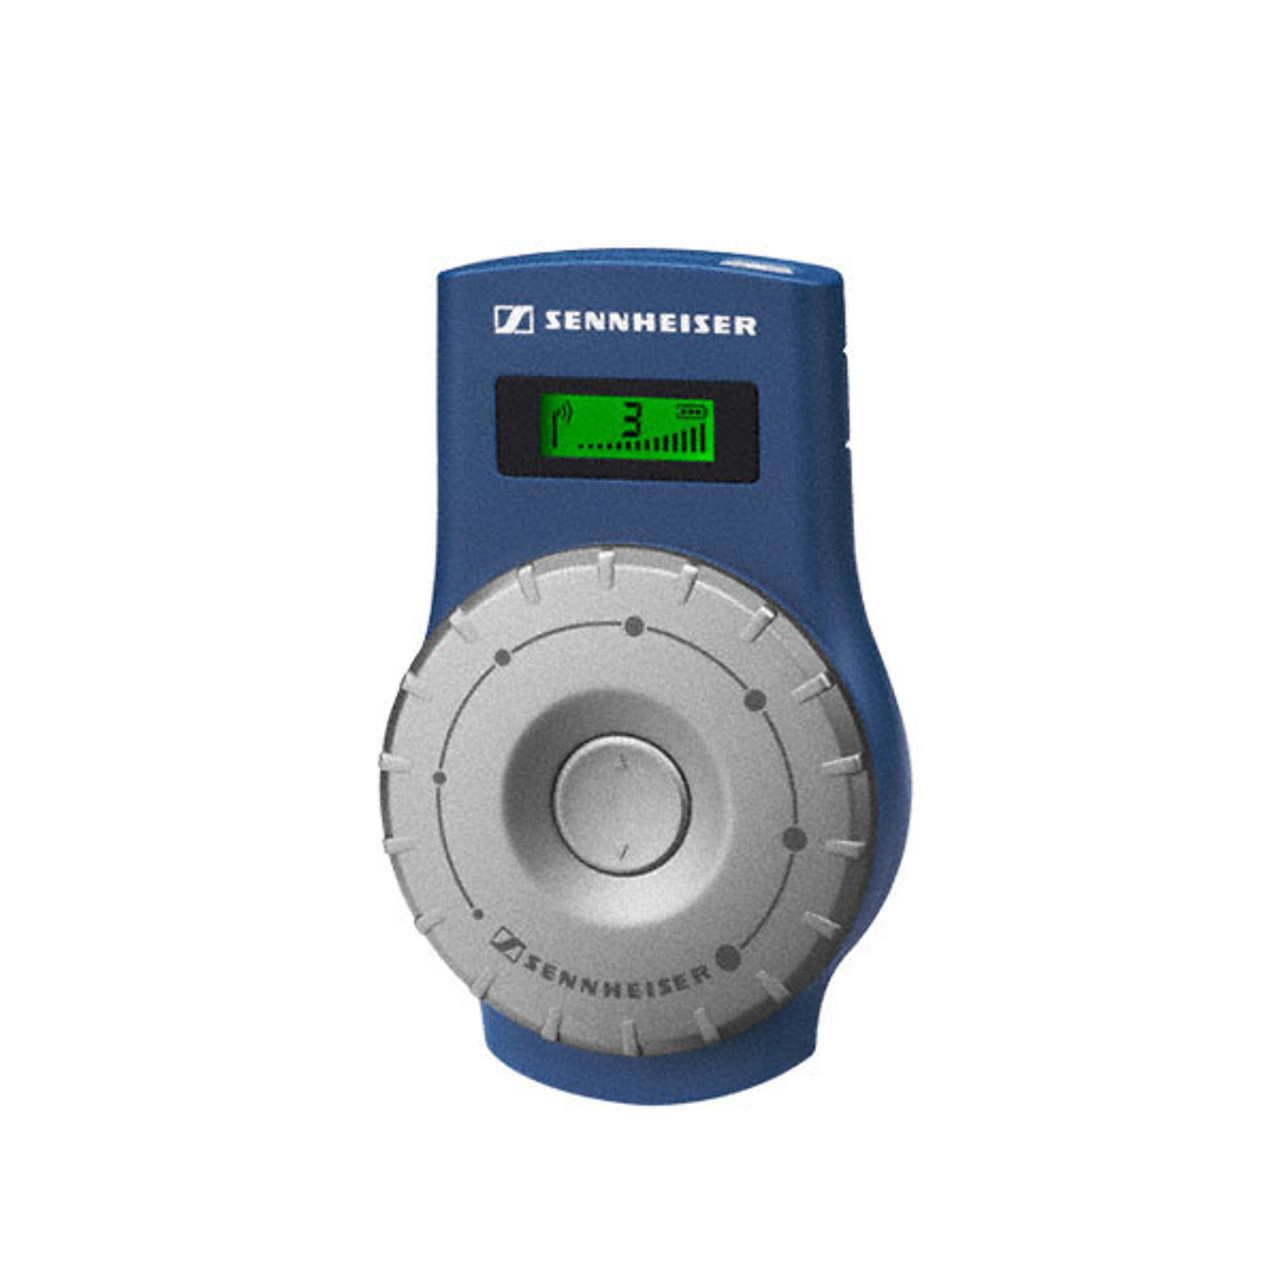 Sennheiser SKM 2020 Microphone | Wireless Handheld Transmitter - D (926 -  928 MHz)